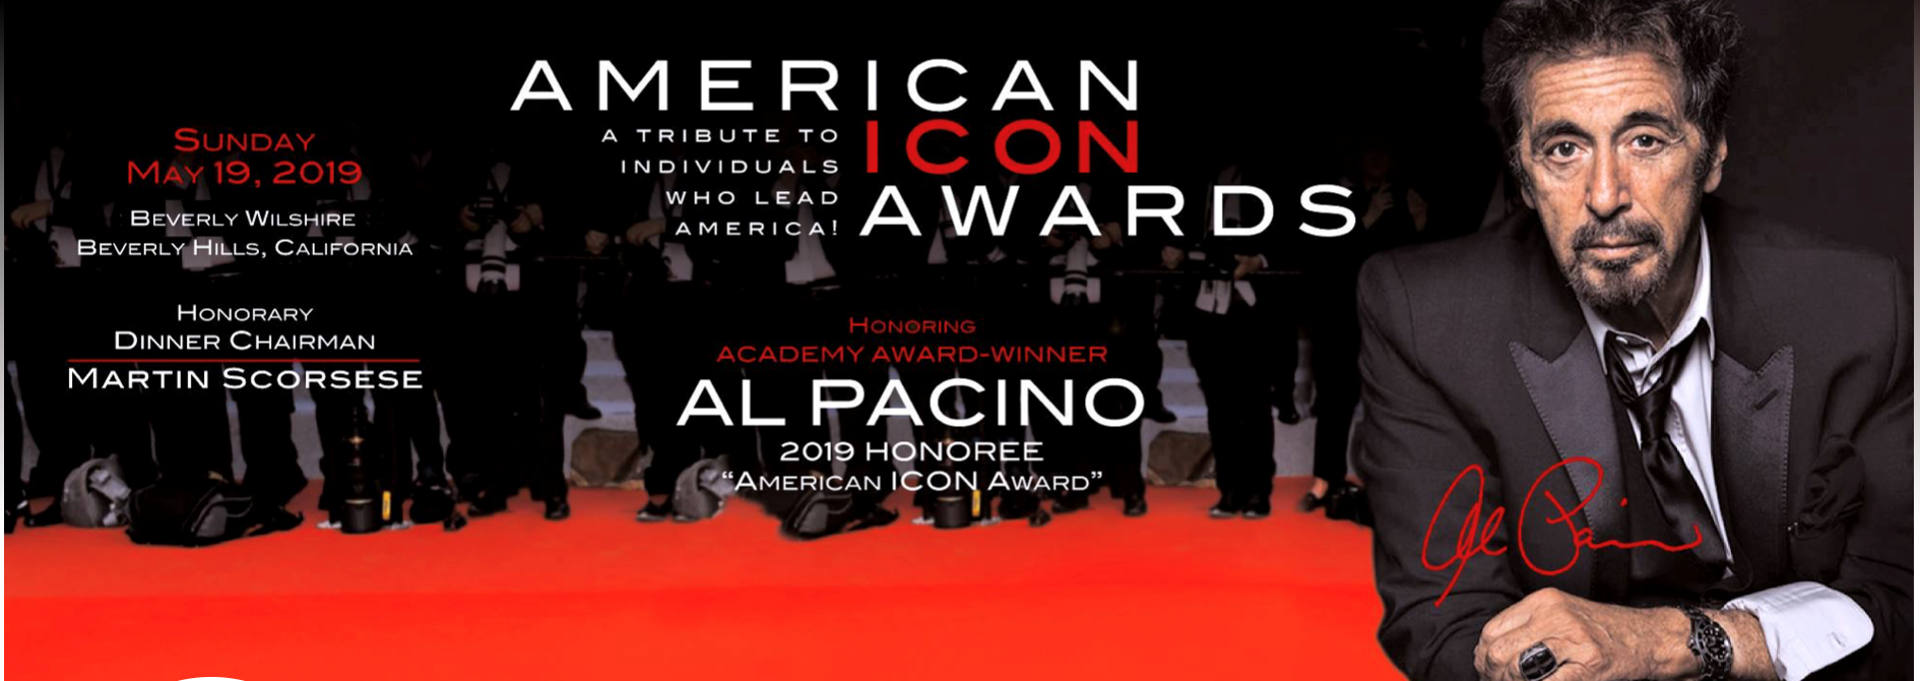 American Icon Awards honoring Al Pacino